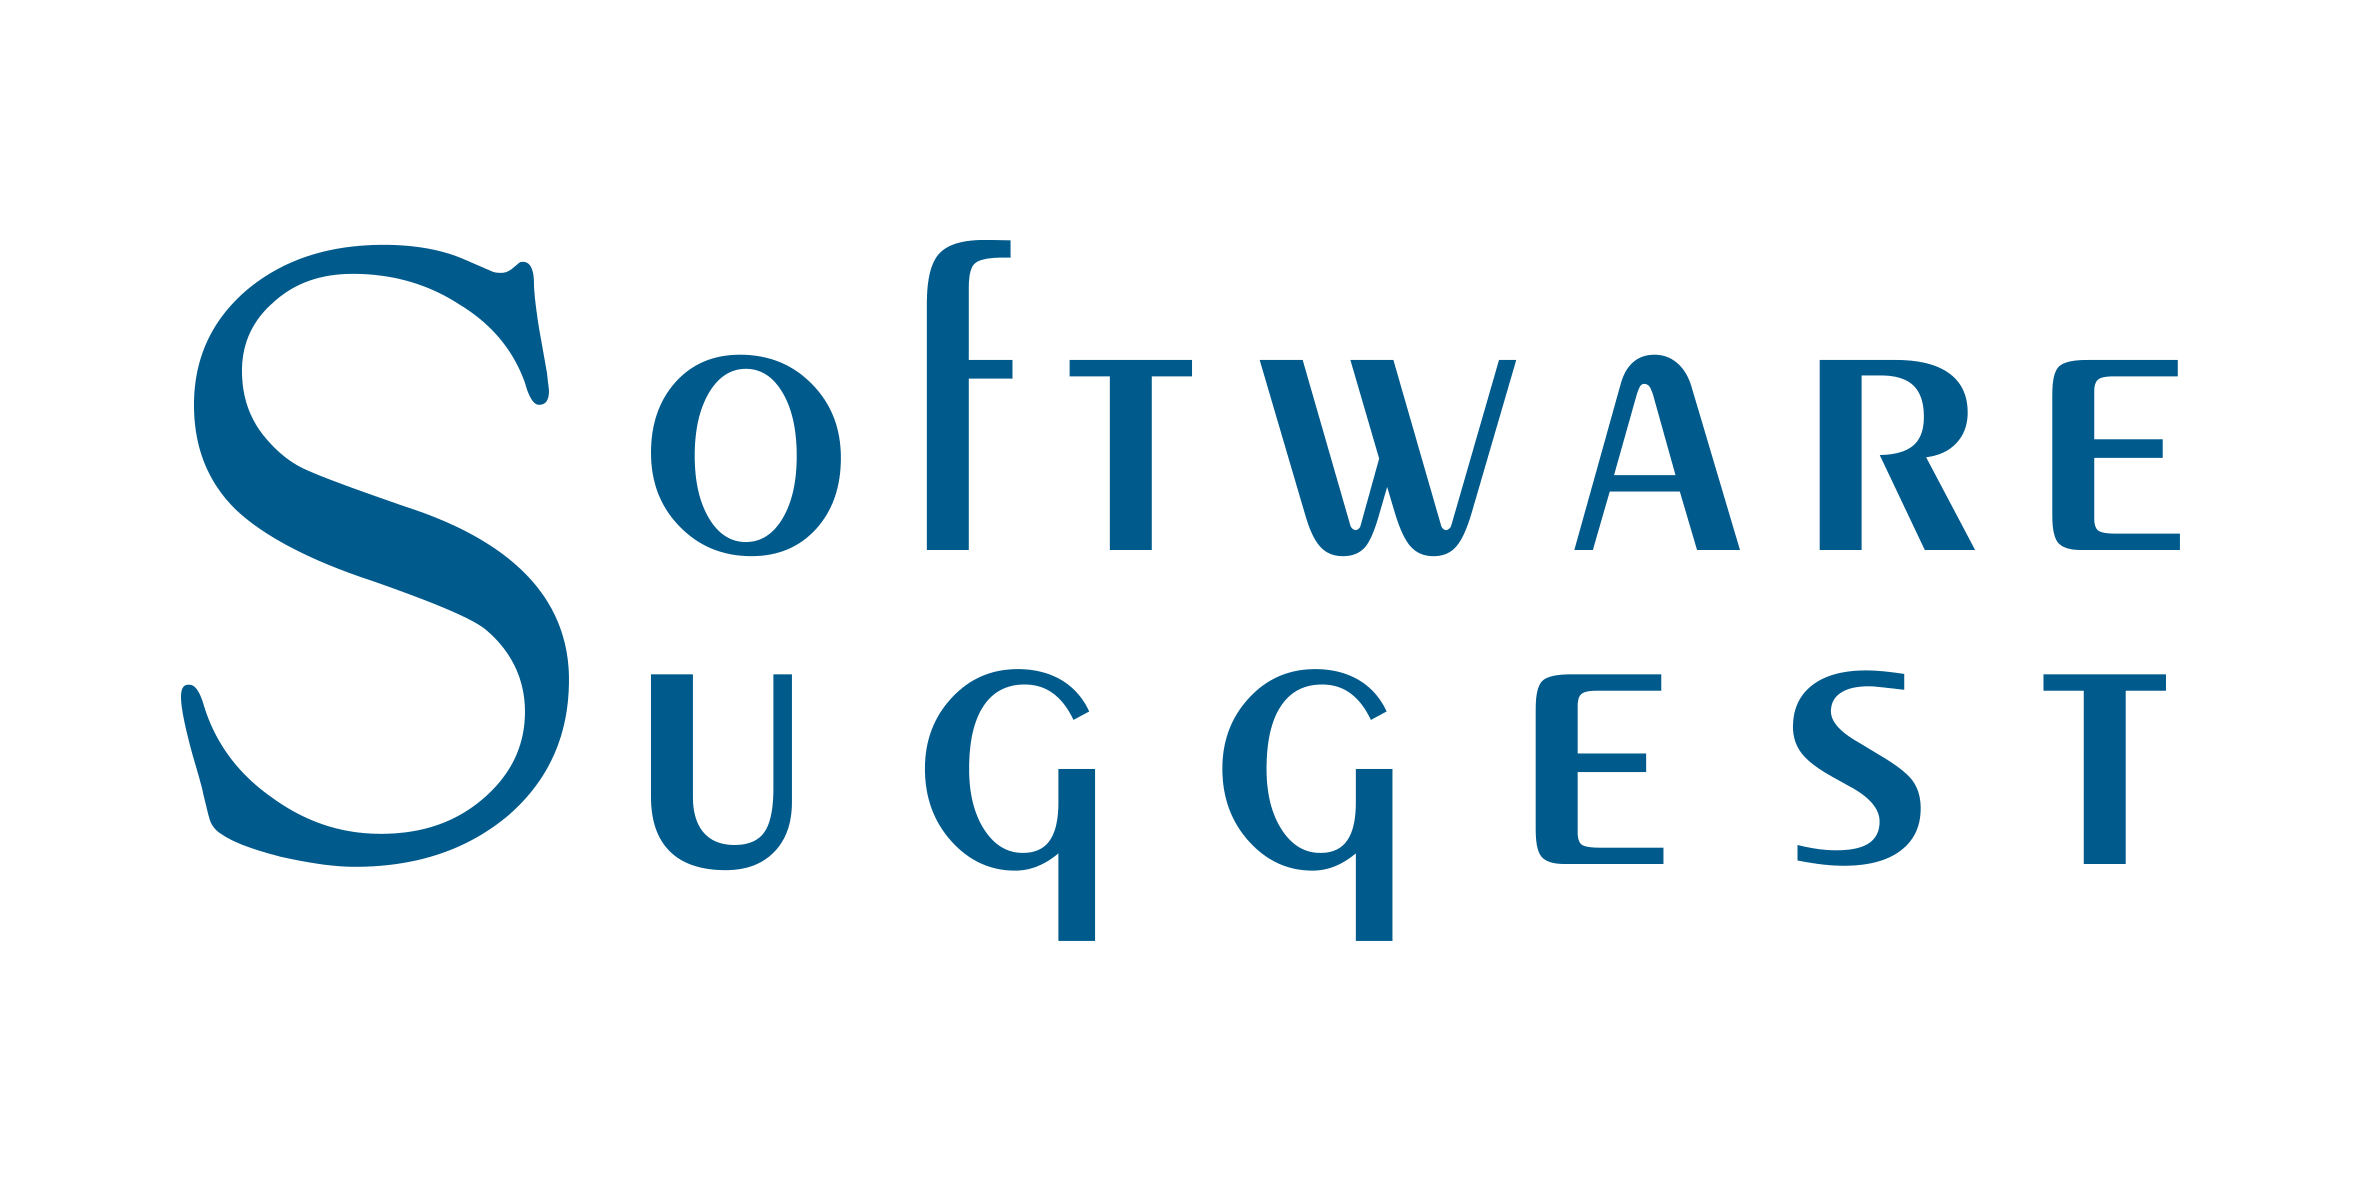 Software Suggest Review platform